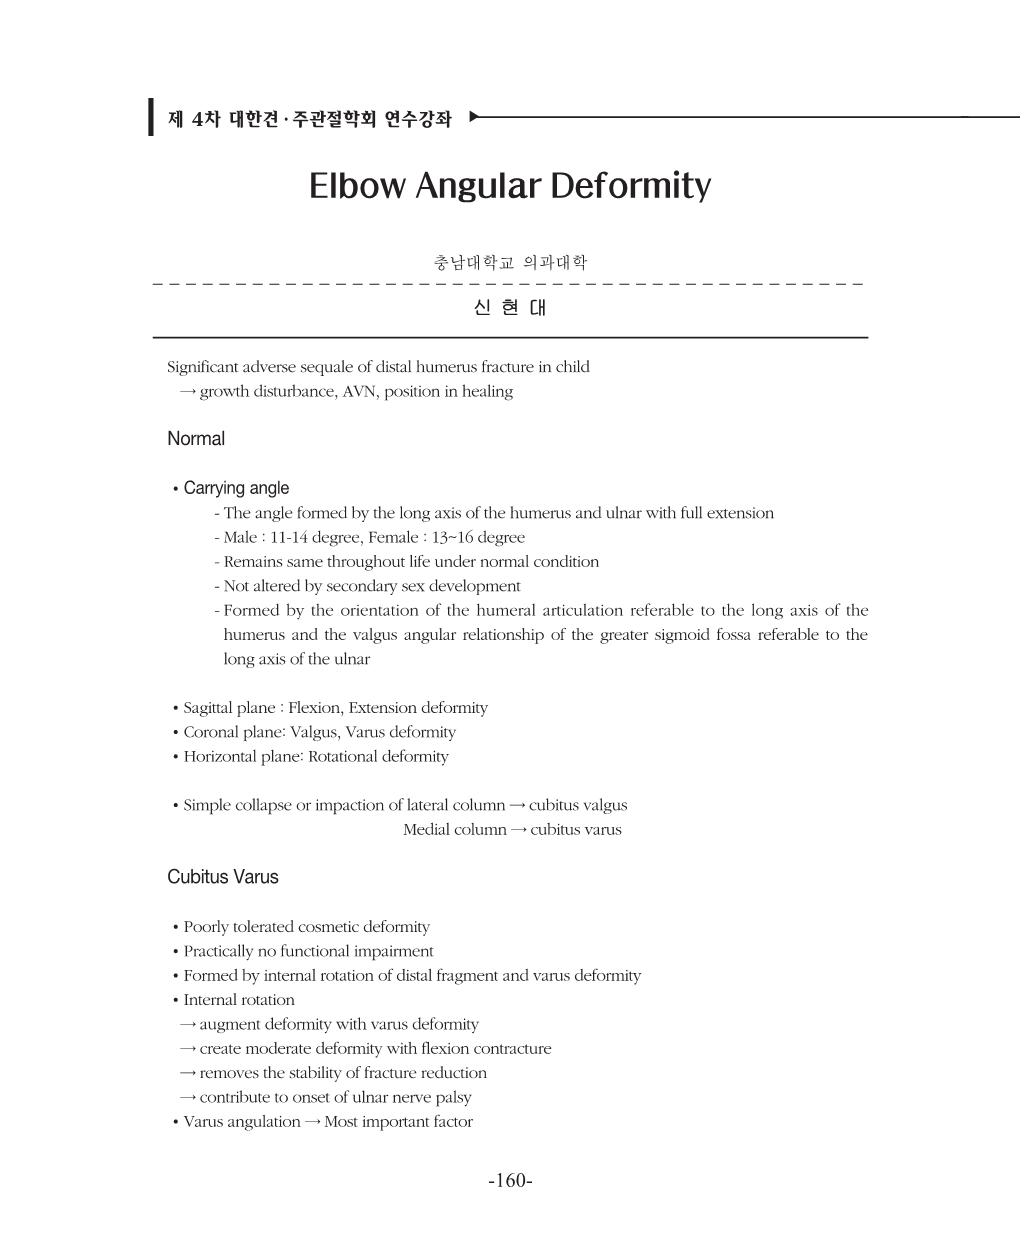 Elbow Angular Deformity